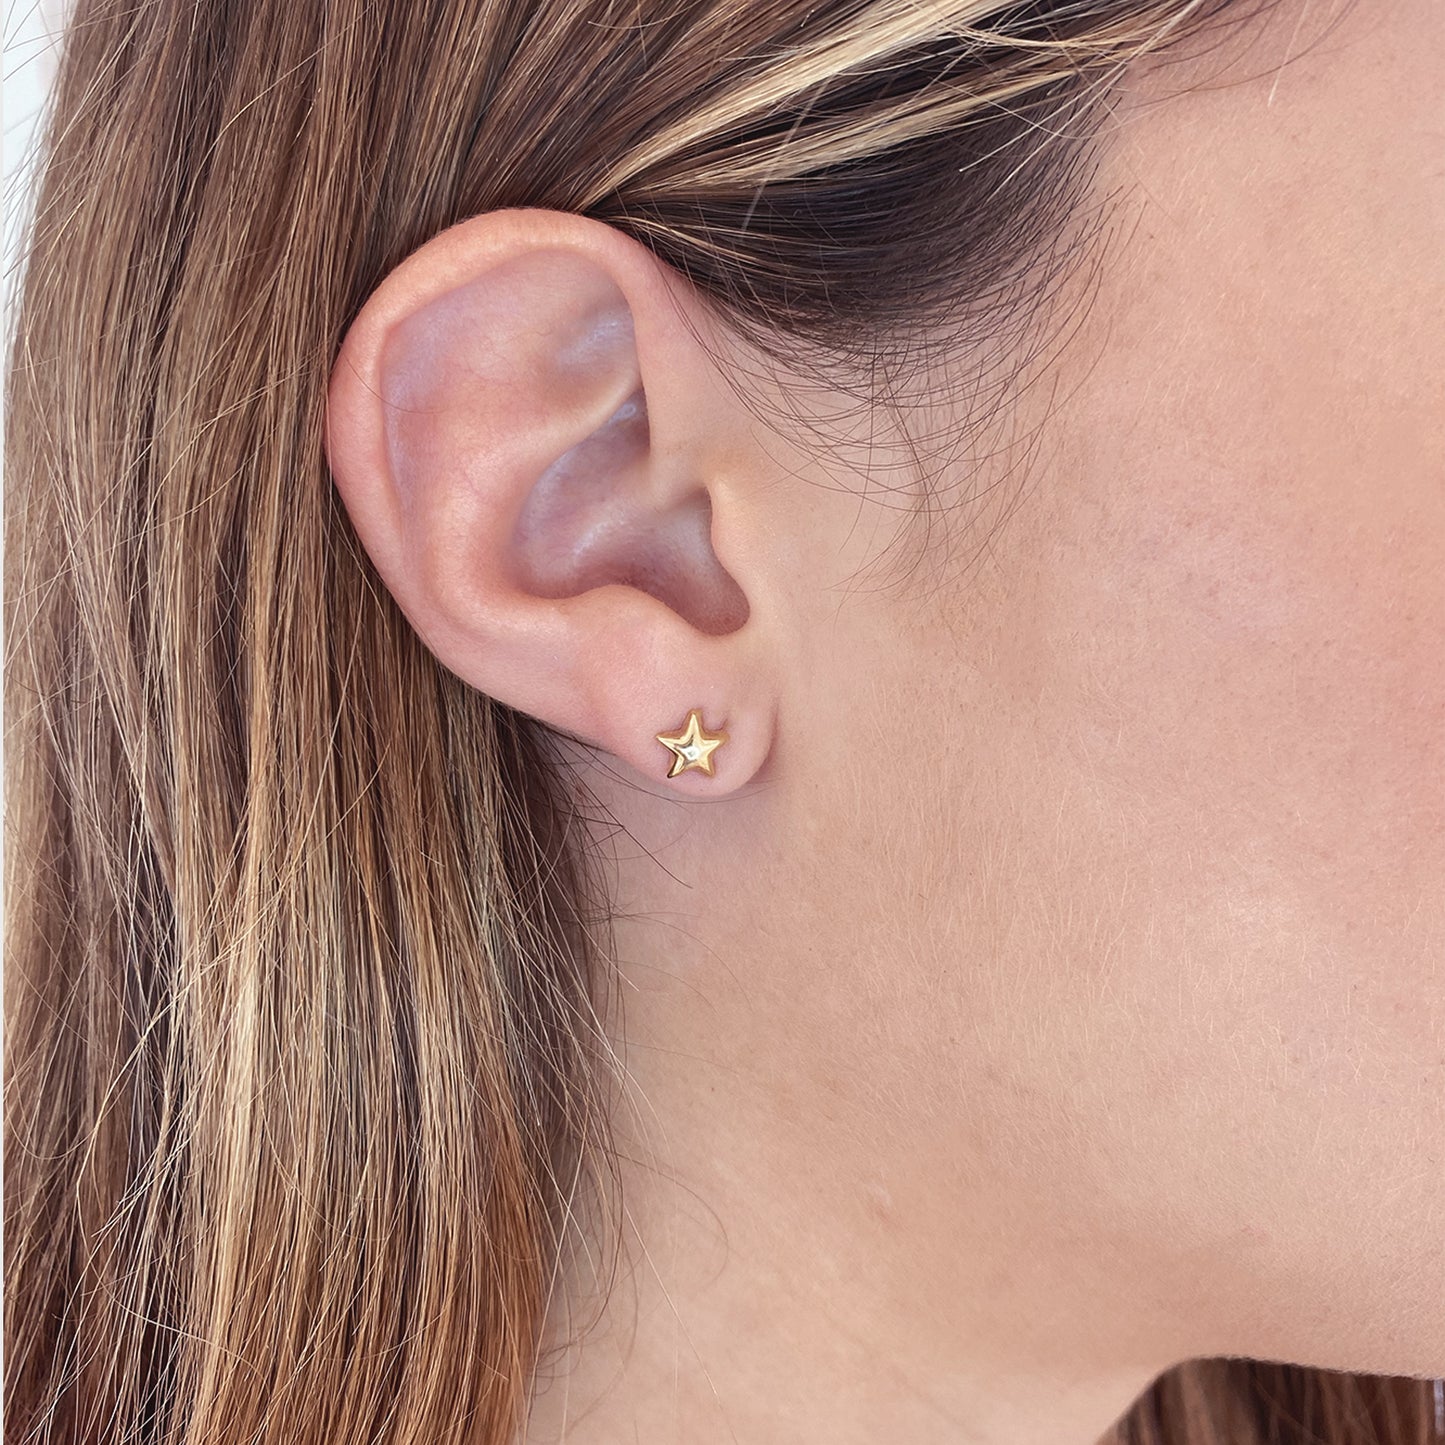 Star Earrings in Real Gold 